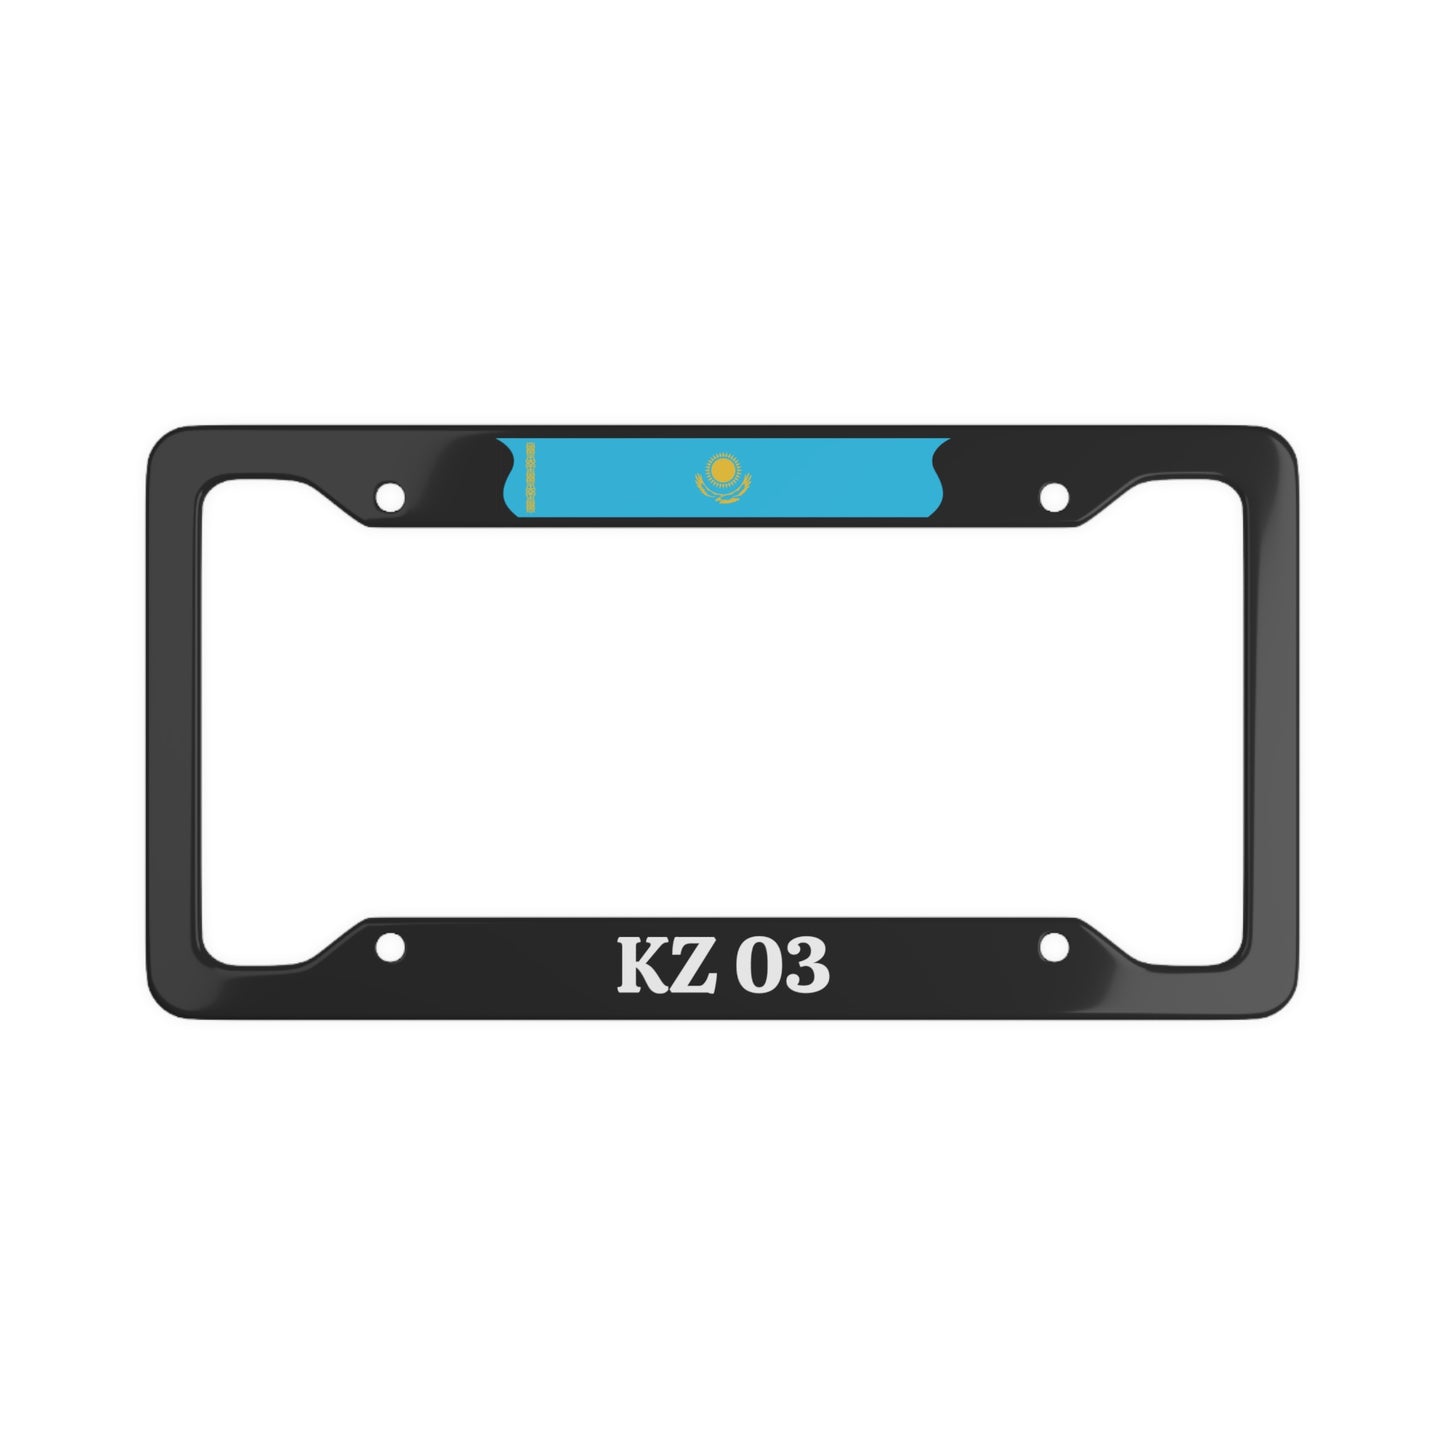 KZ 03 License Plate Frame